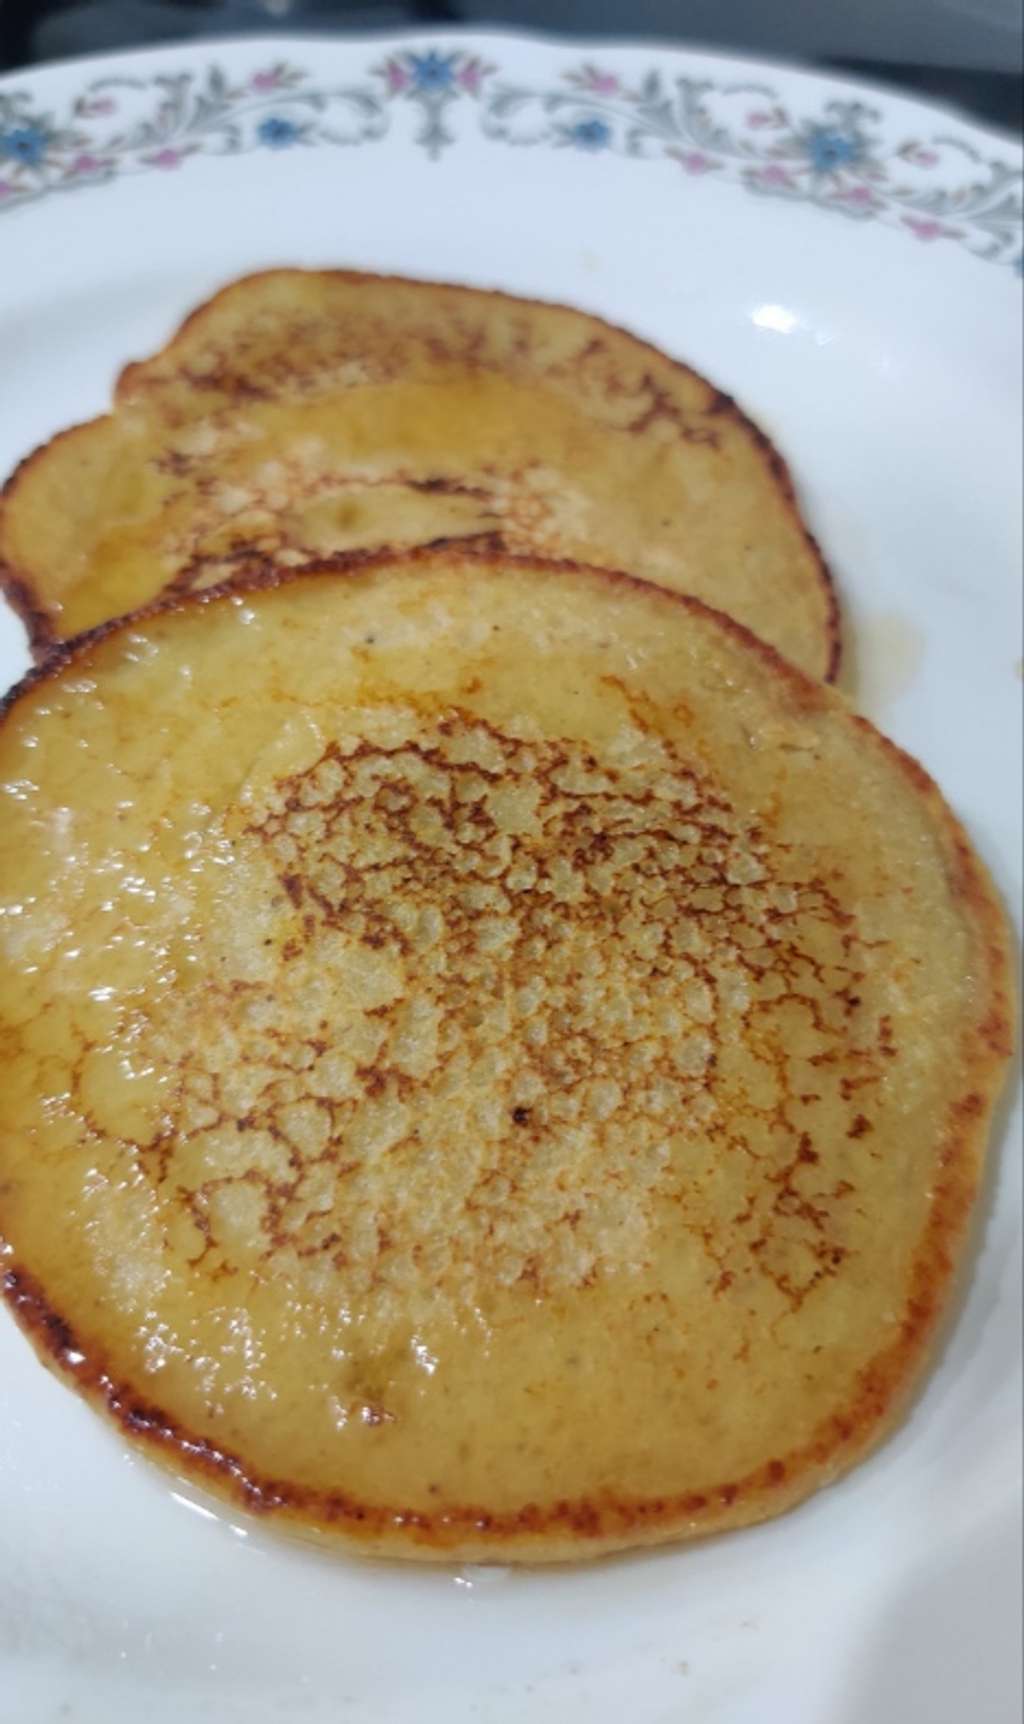 Eggless oats pancakes

